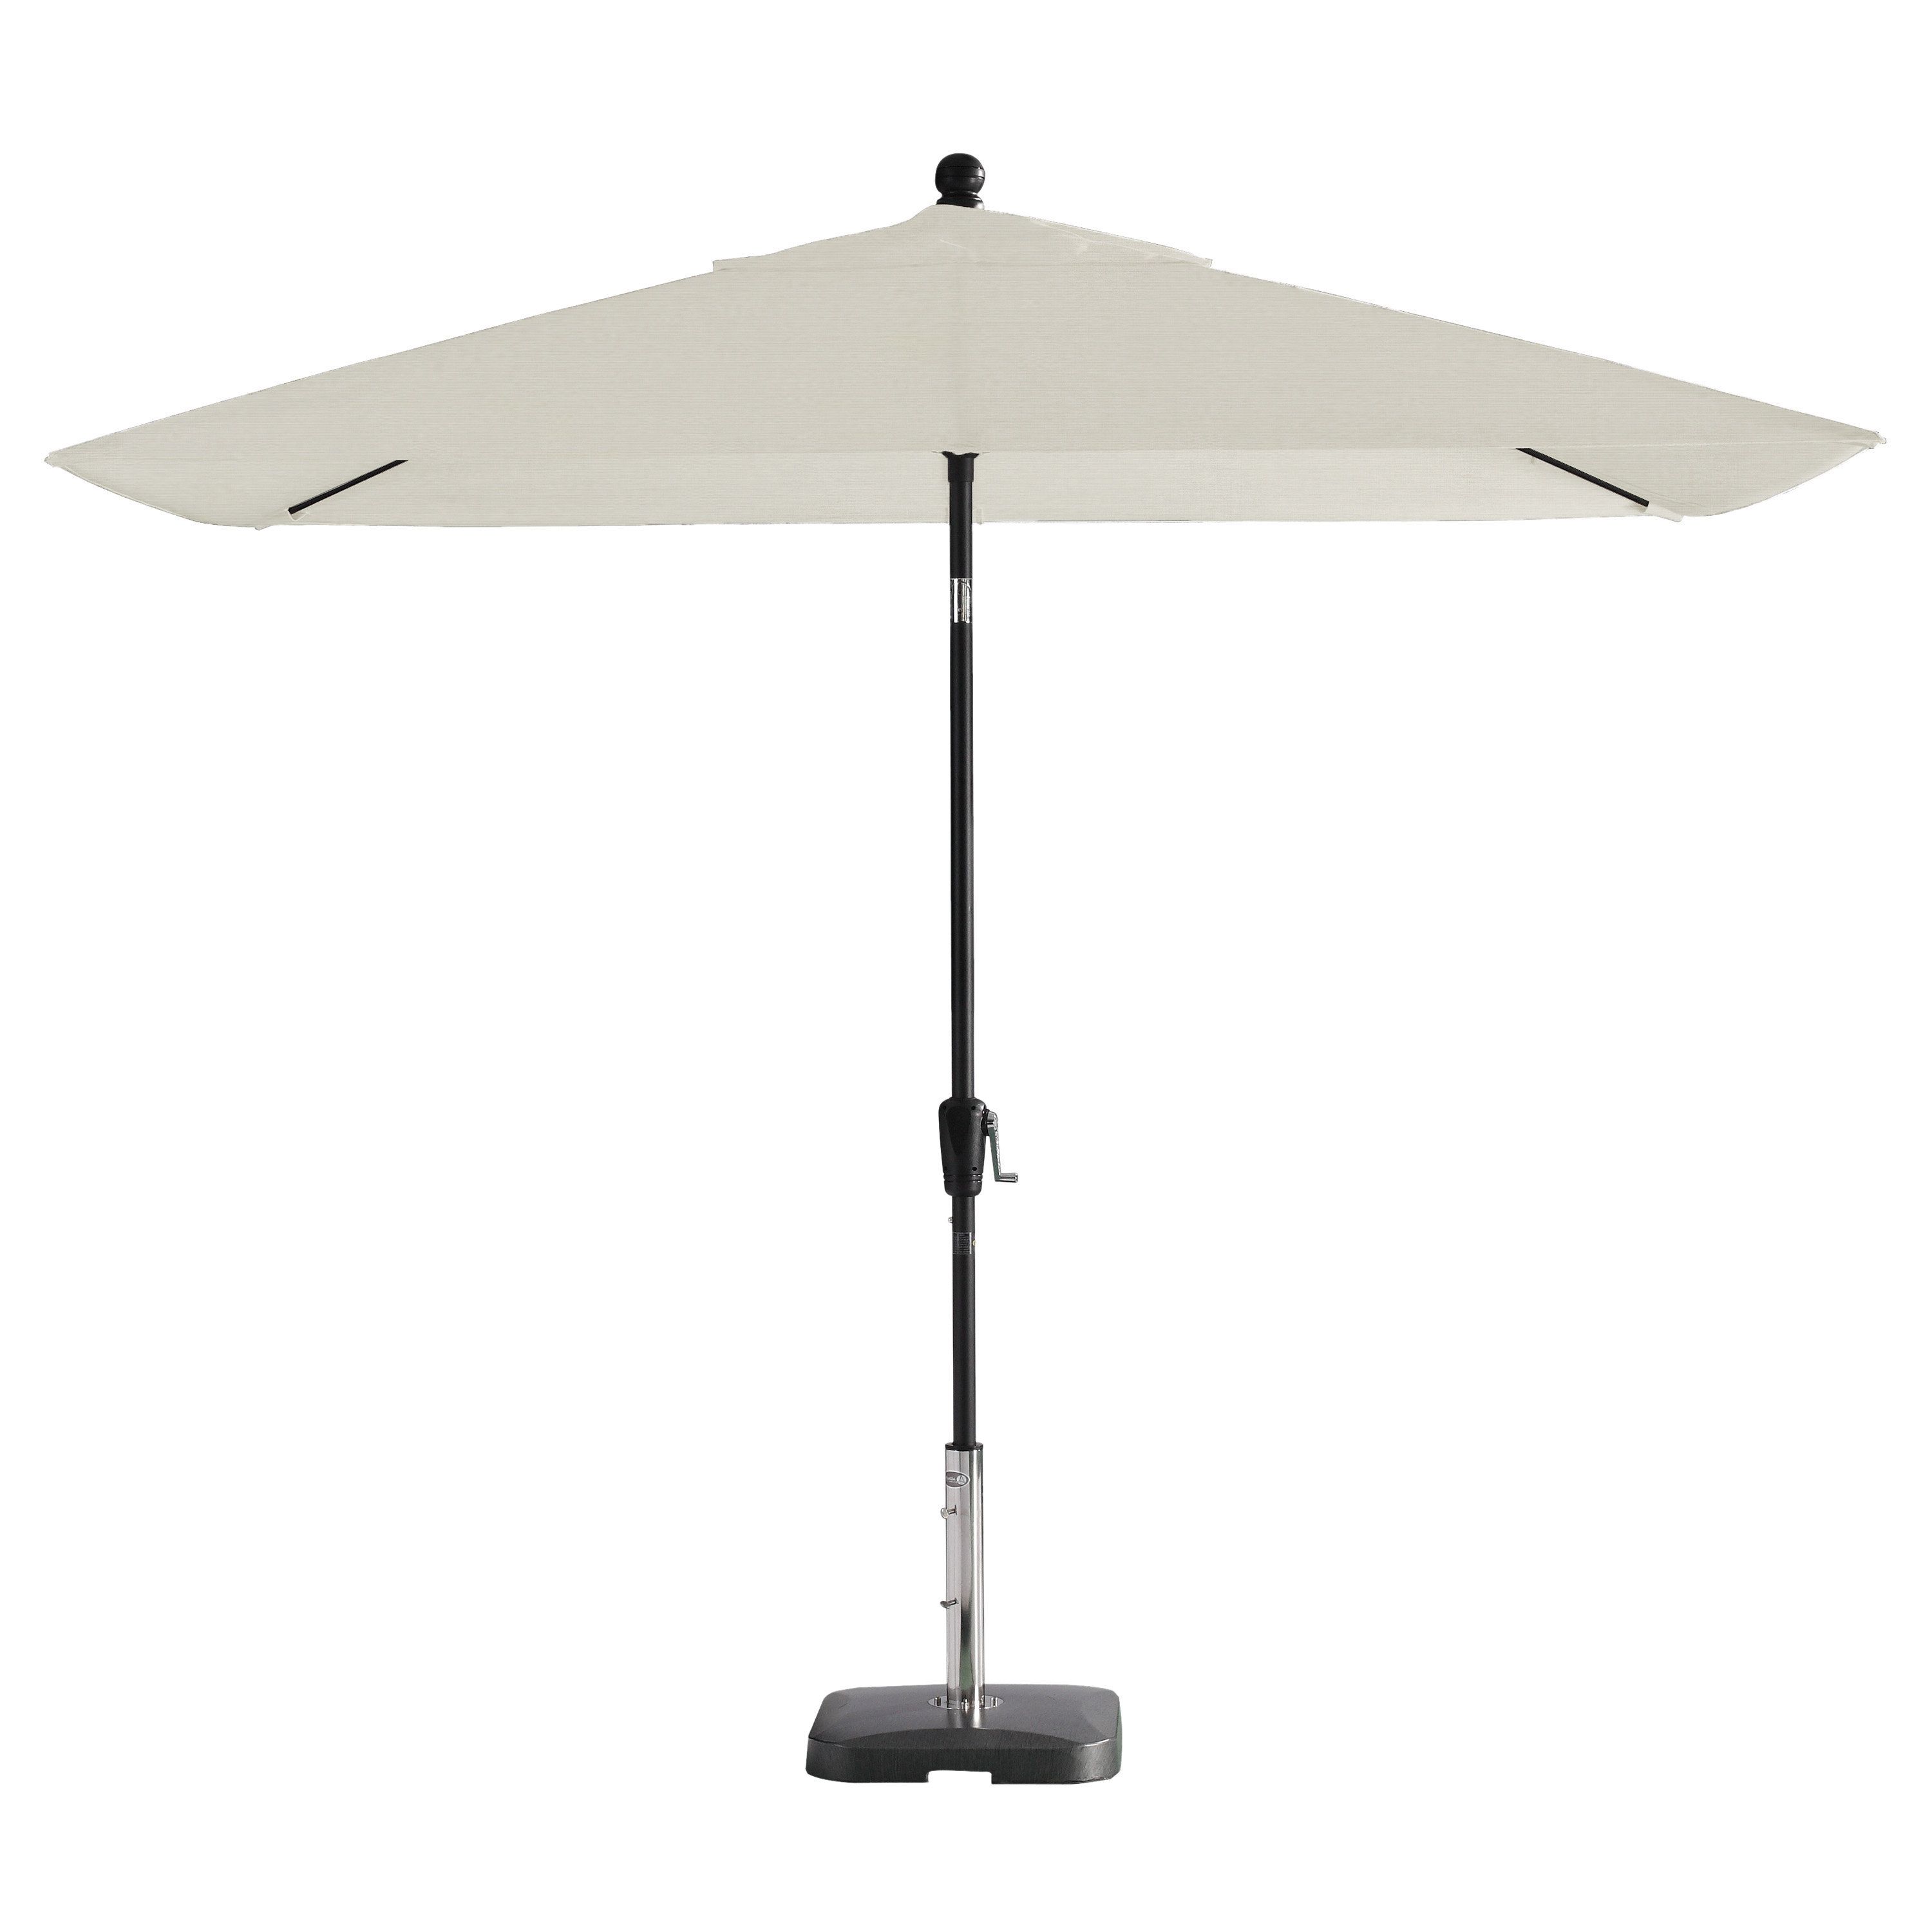 2019 Gries Rectangular Market Umbrellas For Wiechmann Push Tilt 9' X 7' Rectangular Market Umbrella (View 8 of 20)